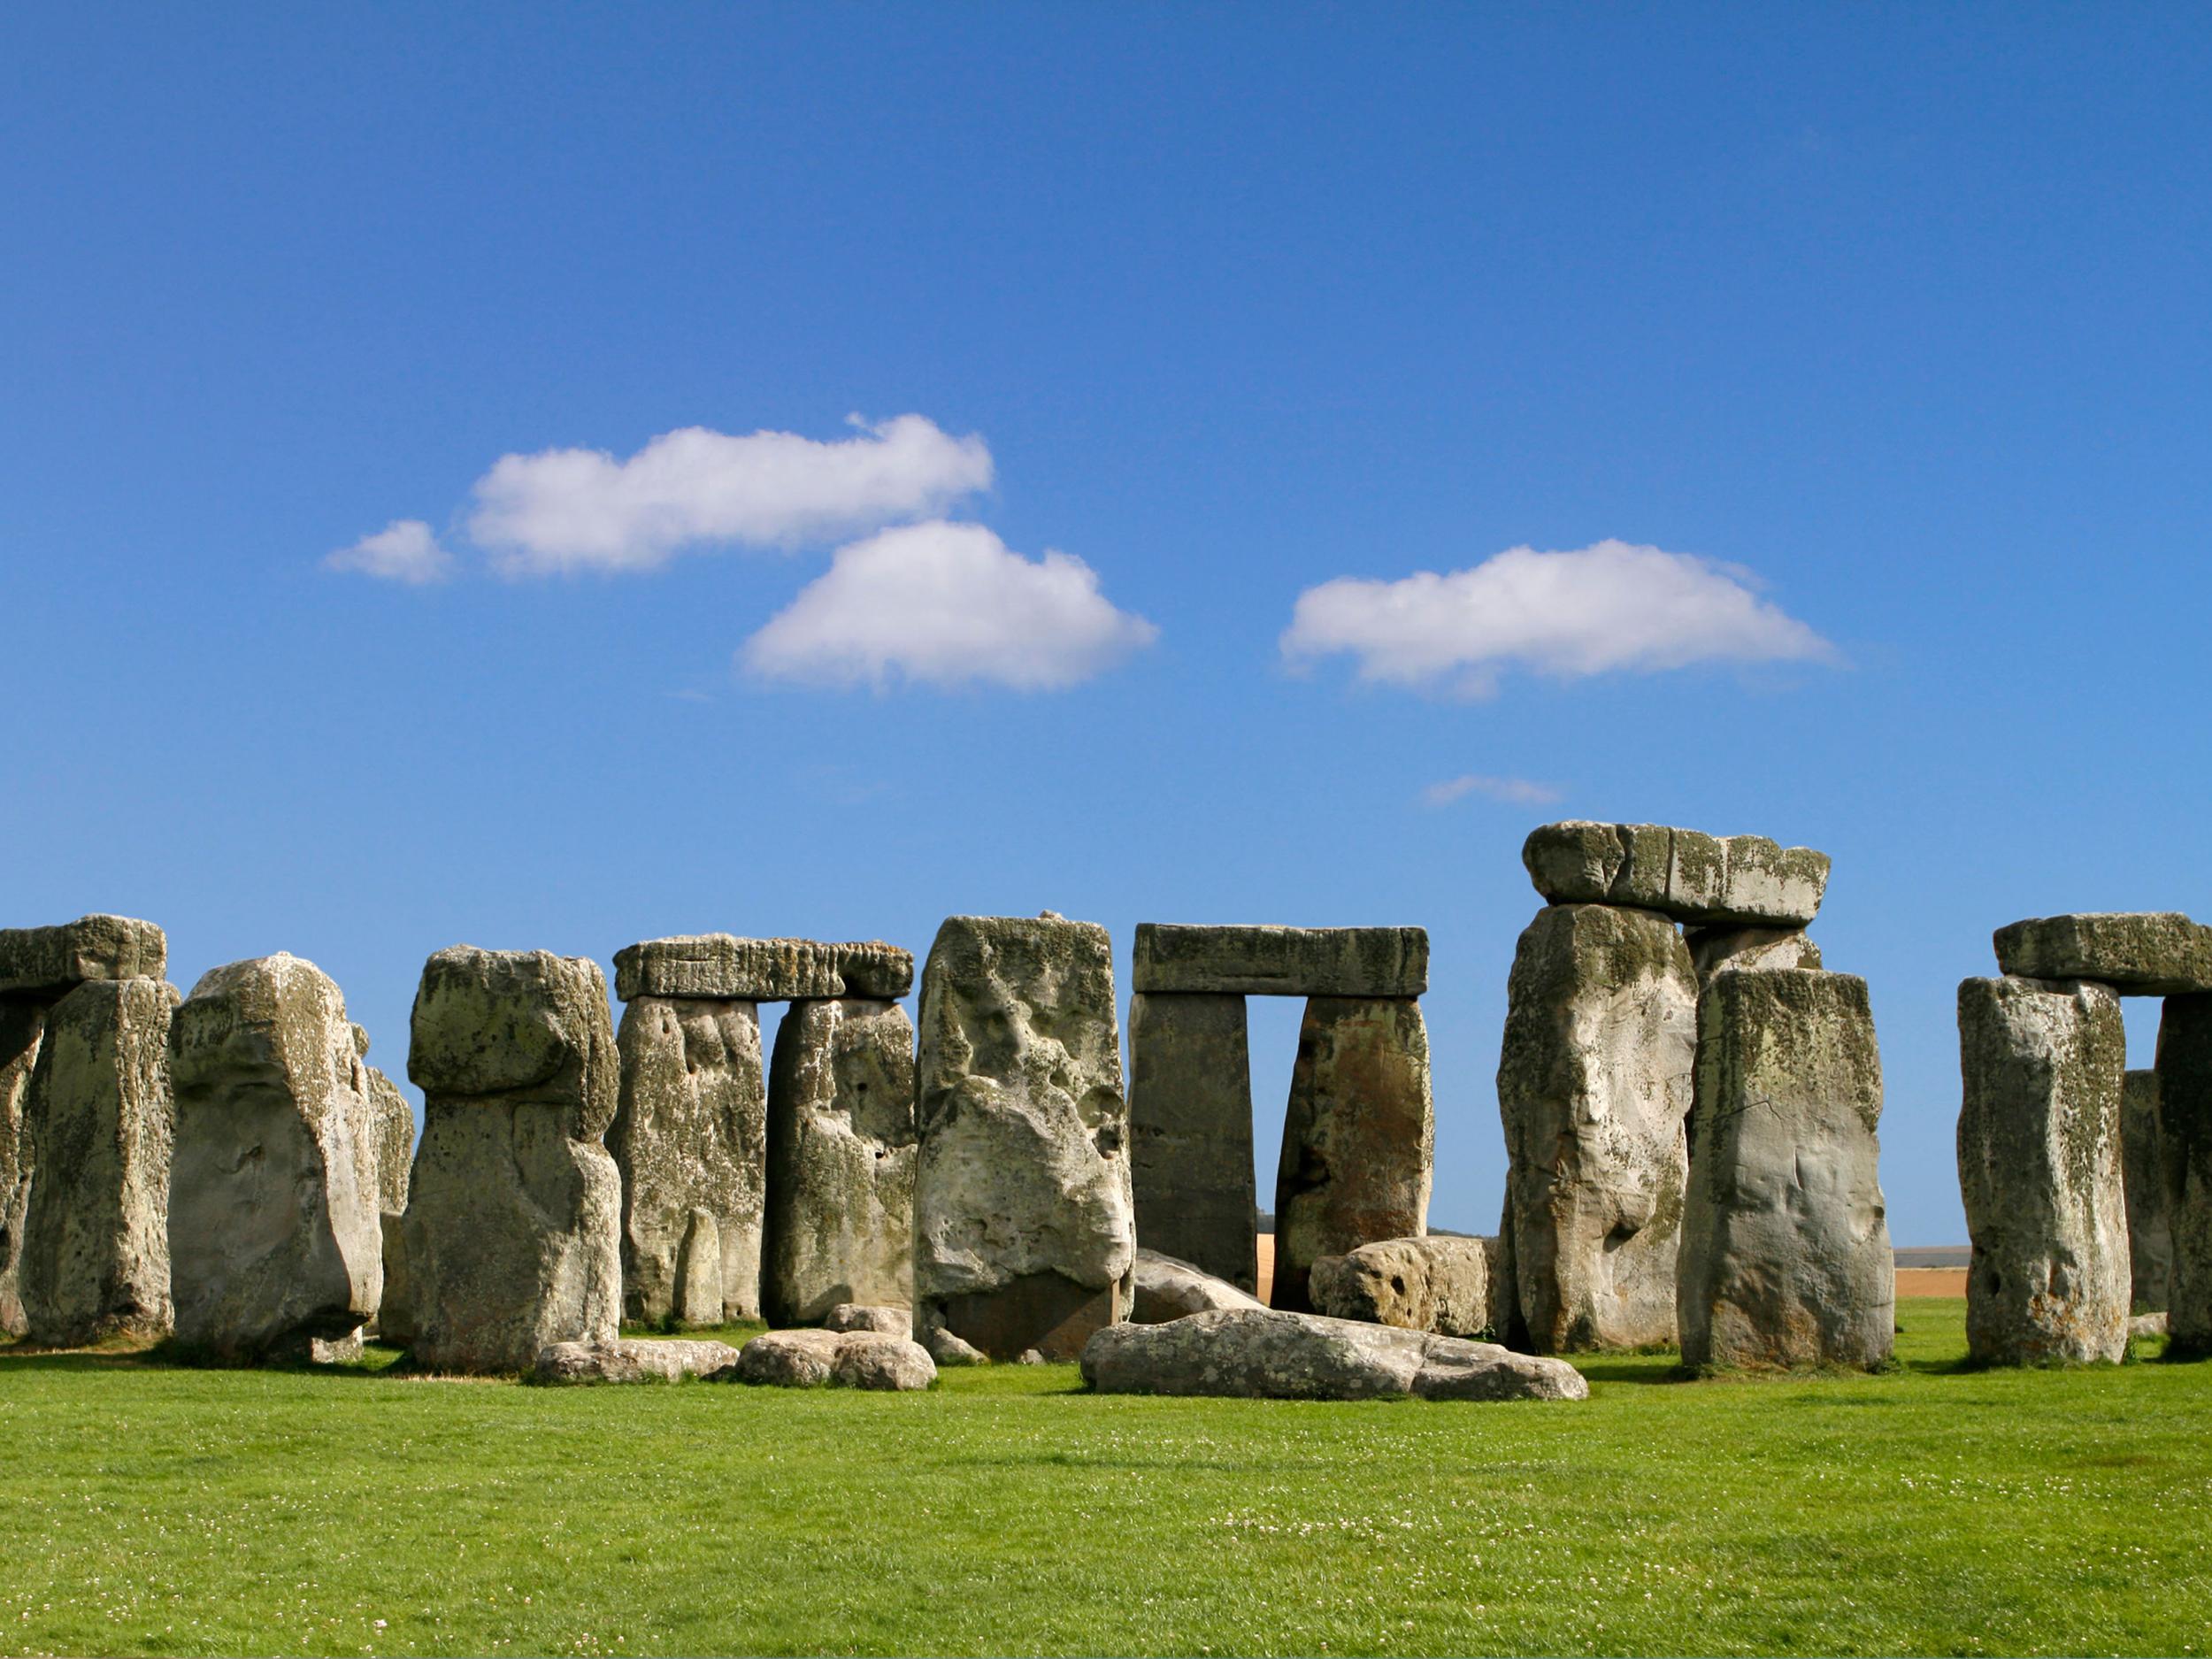 &#13;
Some believe Stonehenge marks the ritual passage through the underworld &#13;